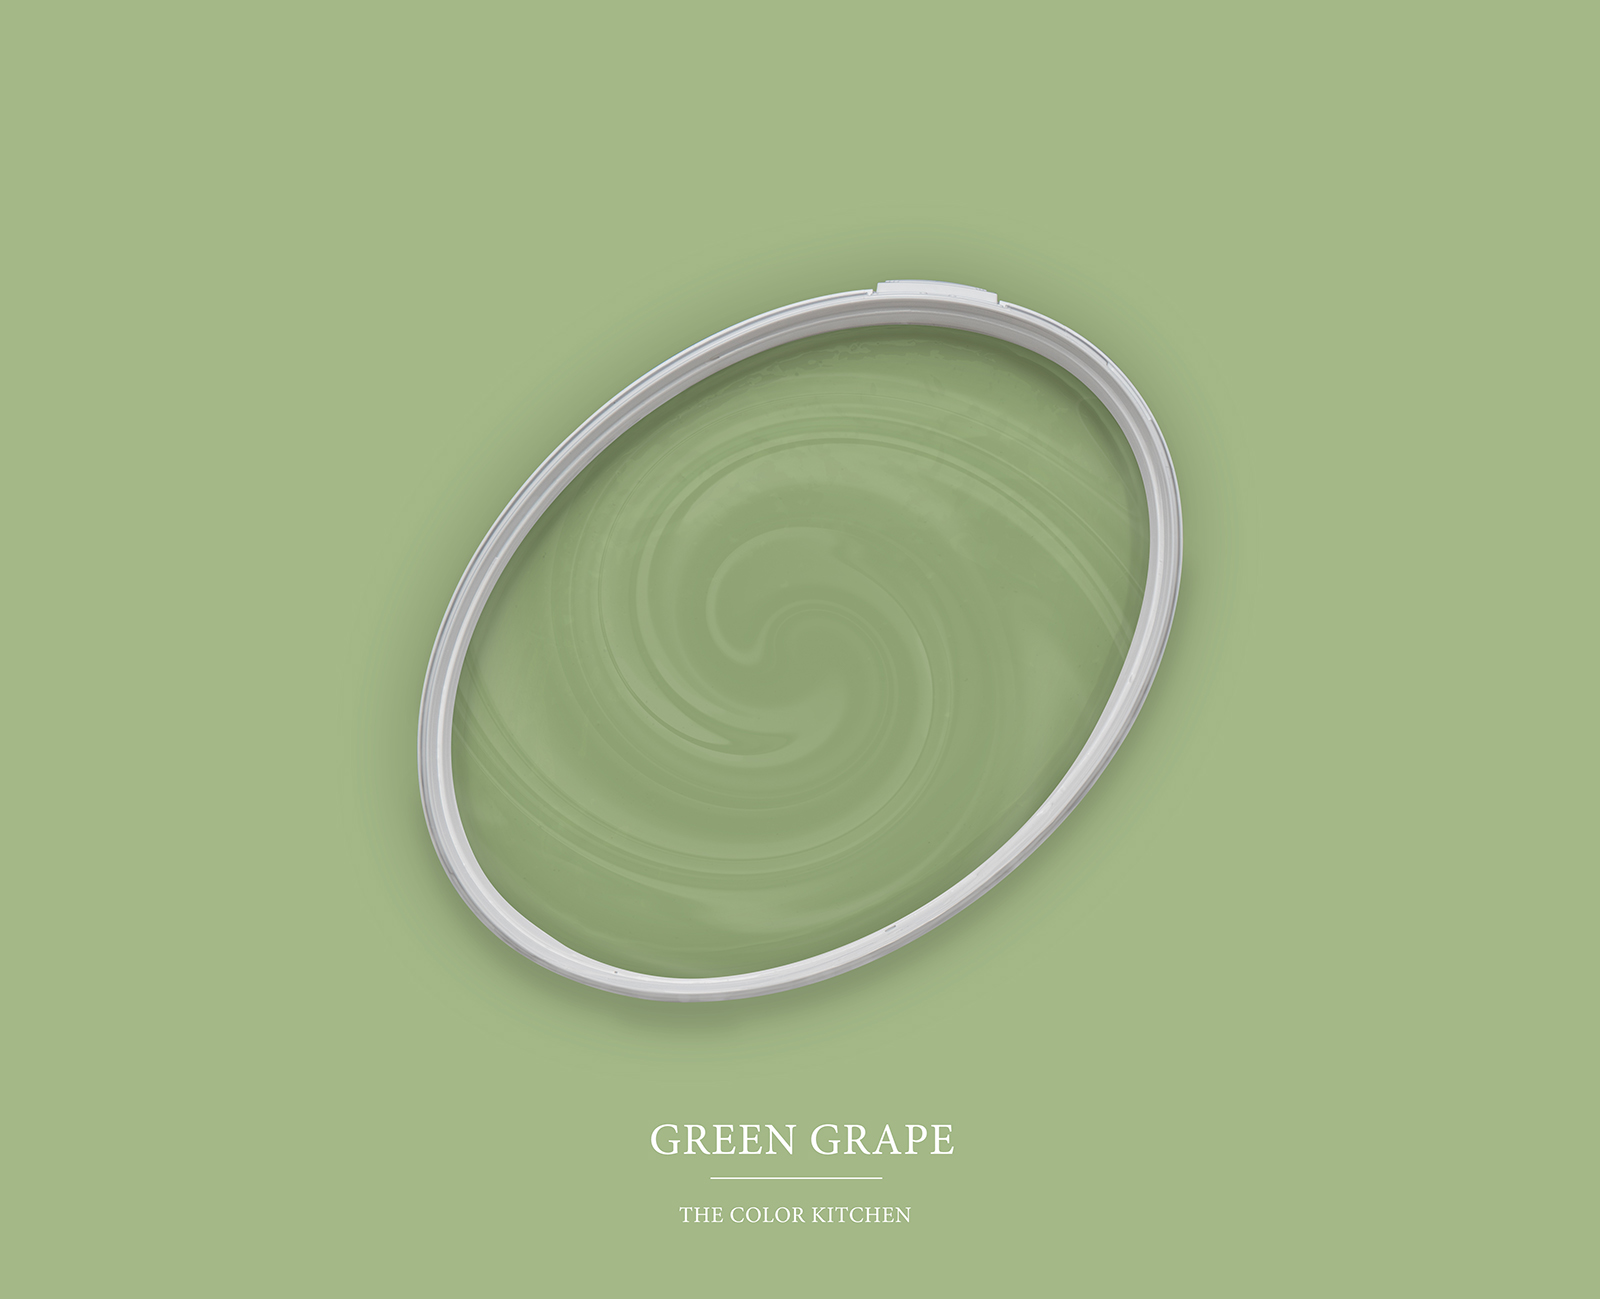 Muurverf TCK4008 »Green Grape« in levendig groen – 2,5 liter
